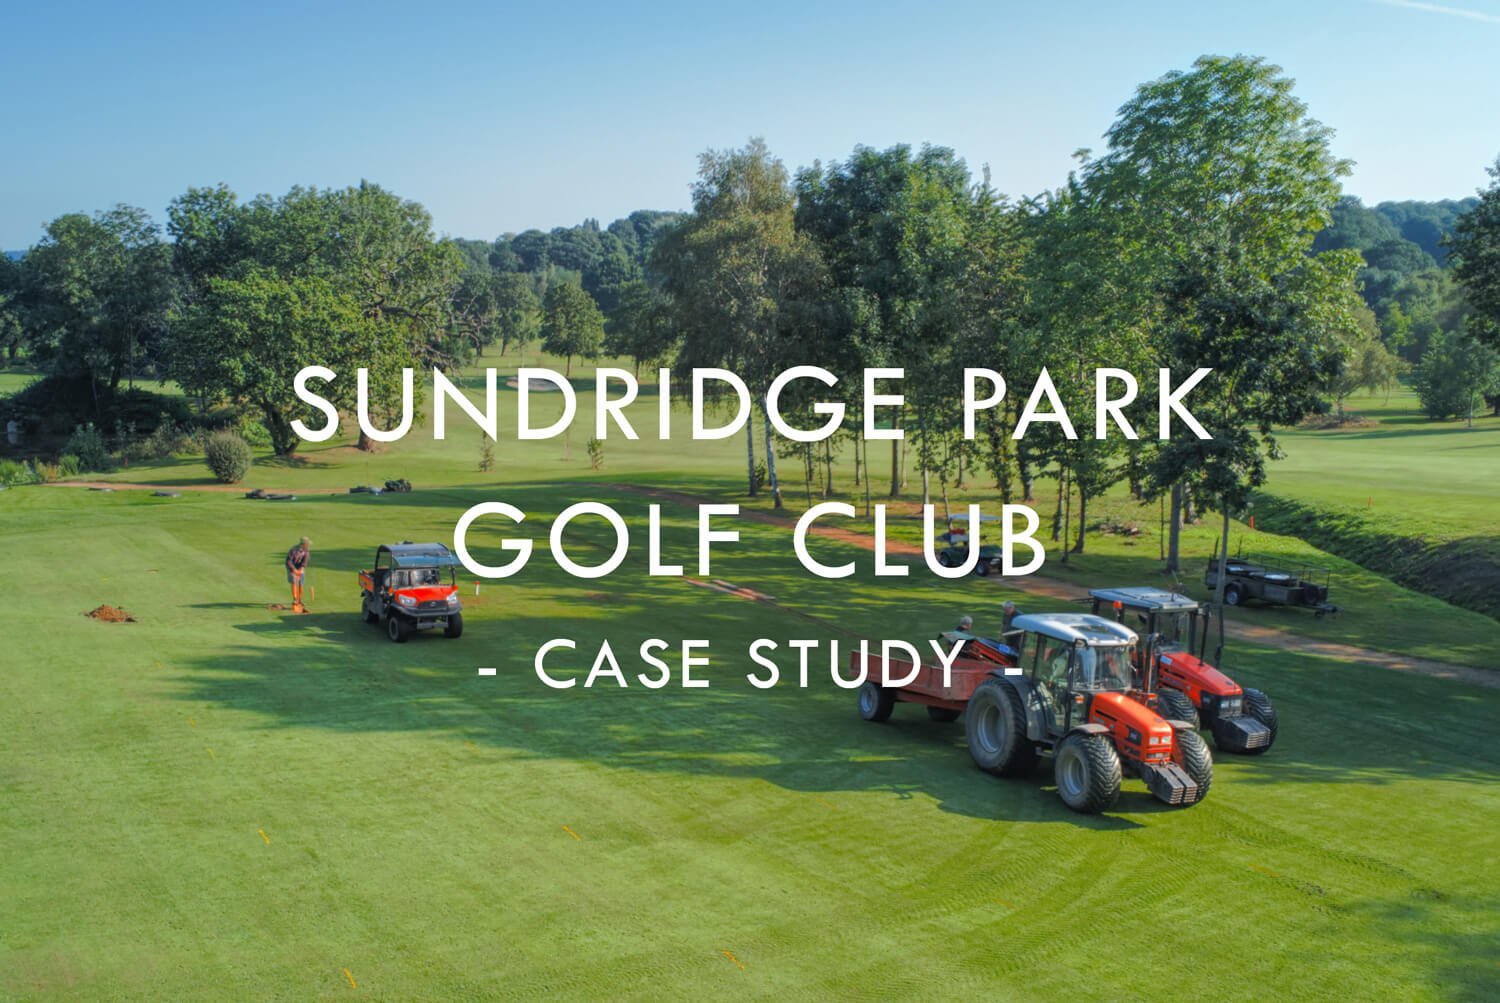 Sundridge Park Golf Club Case Study